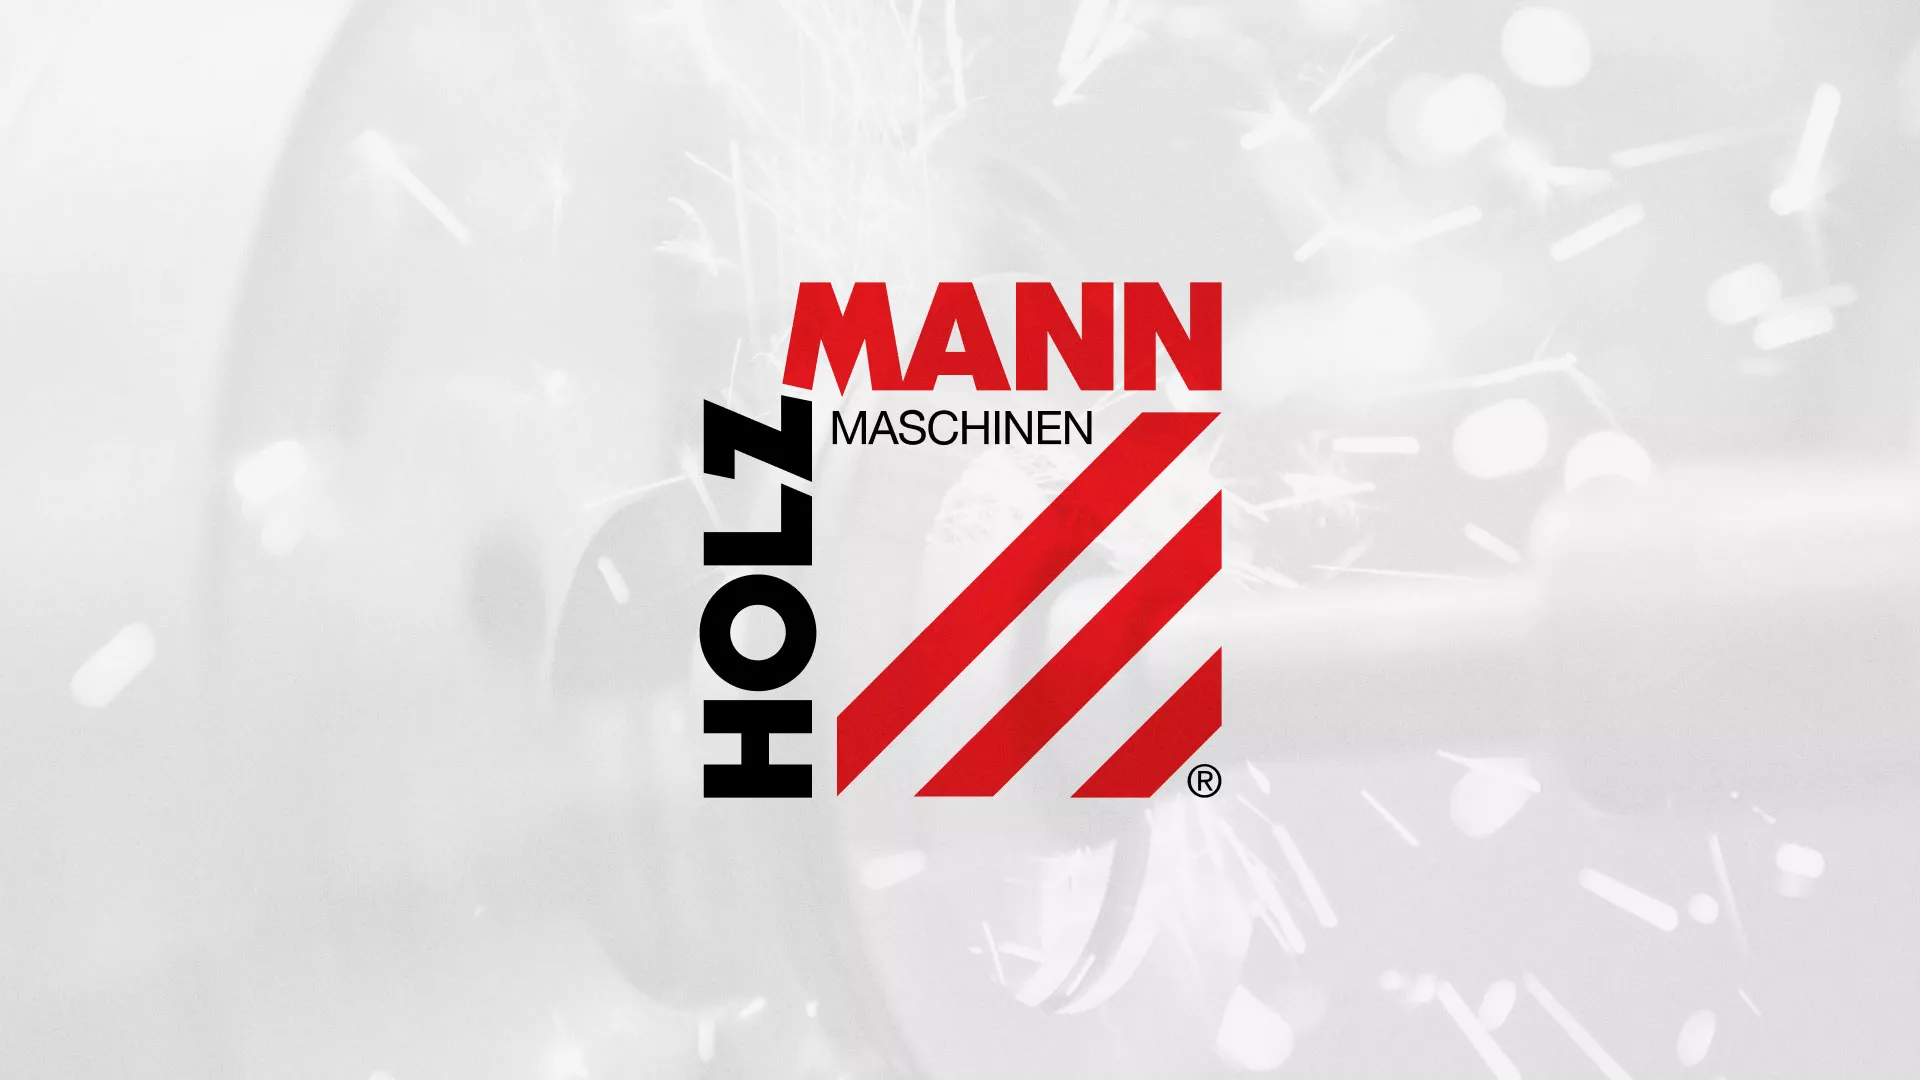 Создание сайта компании «HOLZMANN Maschinen GmbH» в Острове